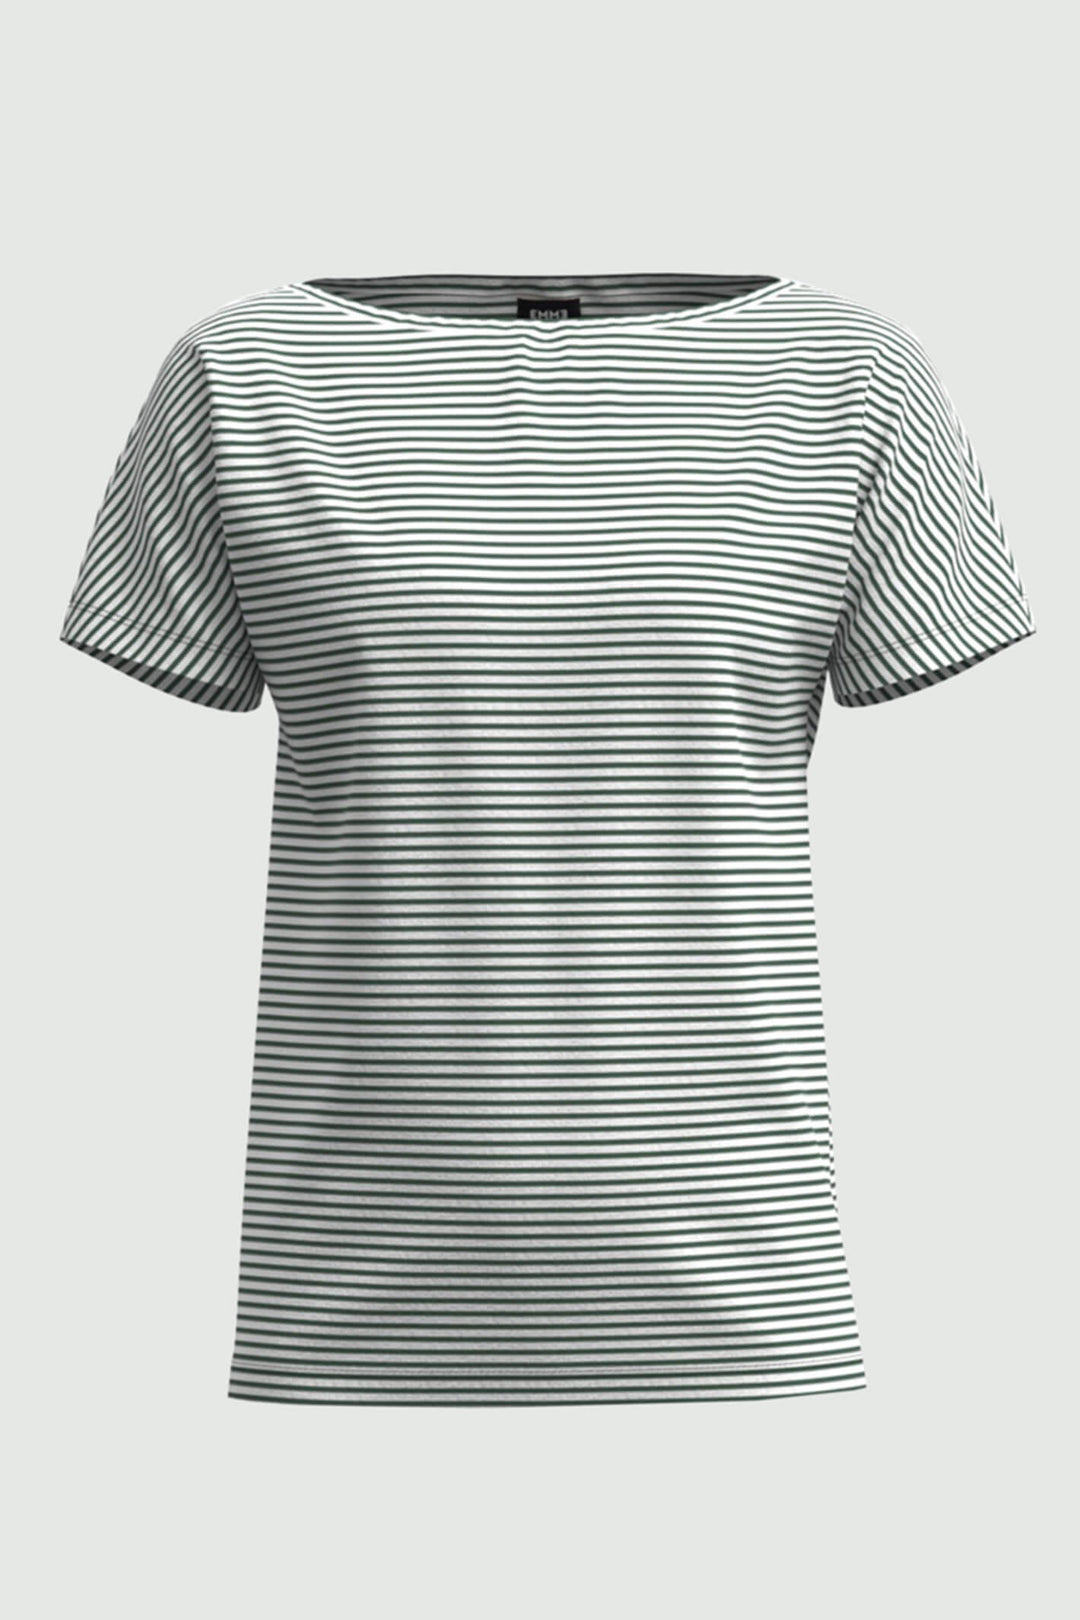 EMME By Marella 59710625200 Agoraio Green Striped T-Shirt - Shirley Allum Boutique